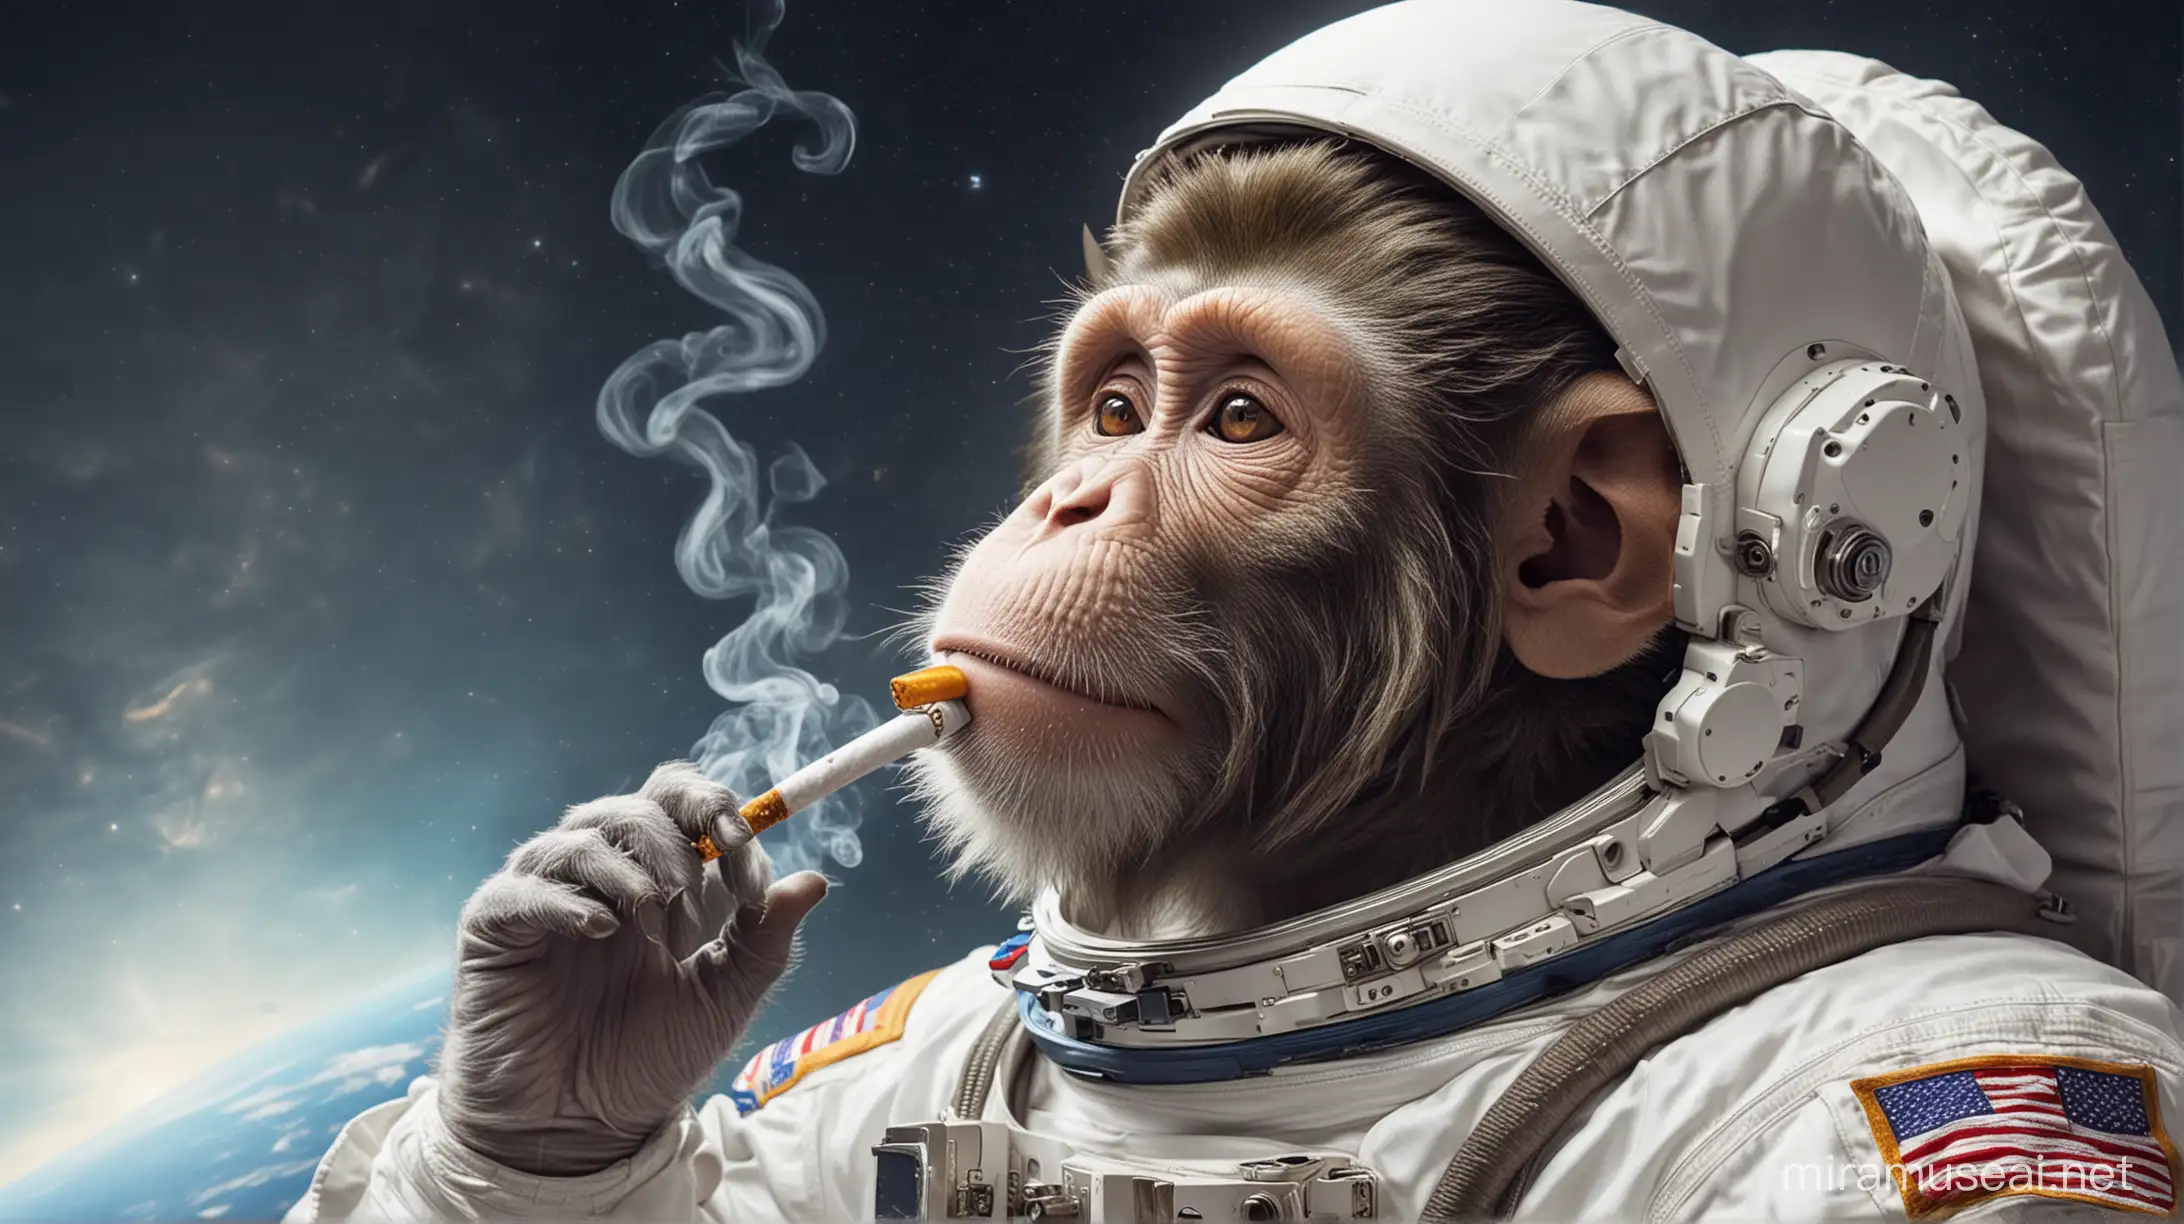 Humorous Astronaut Monkey Smoking Marijuana in Silly Spacesuit